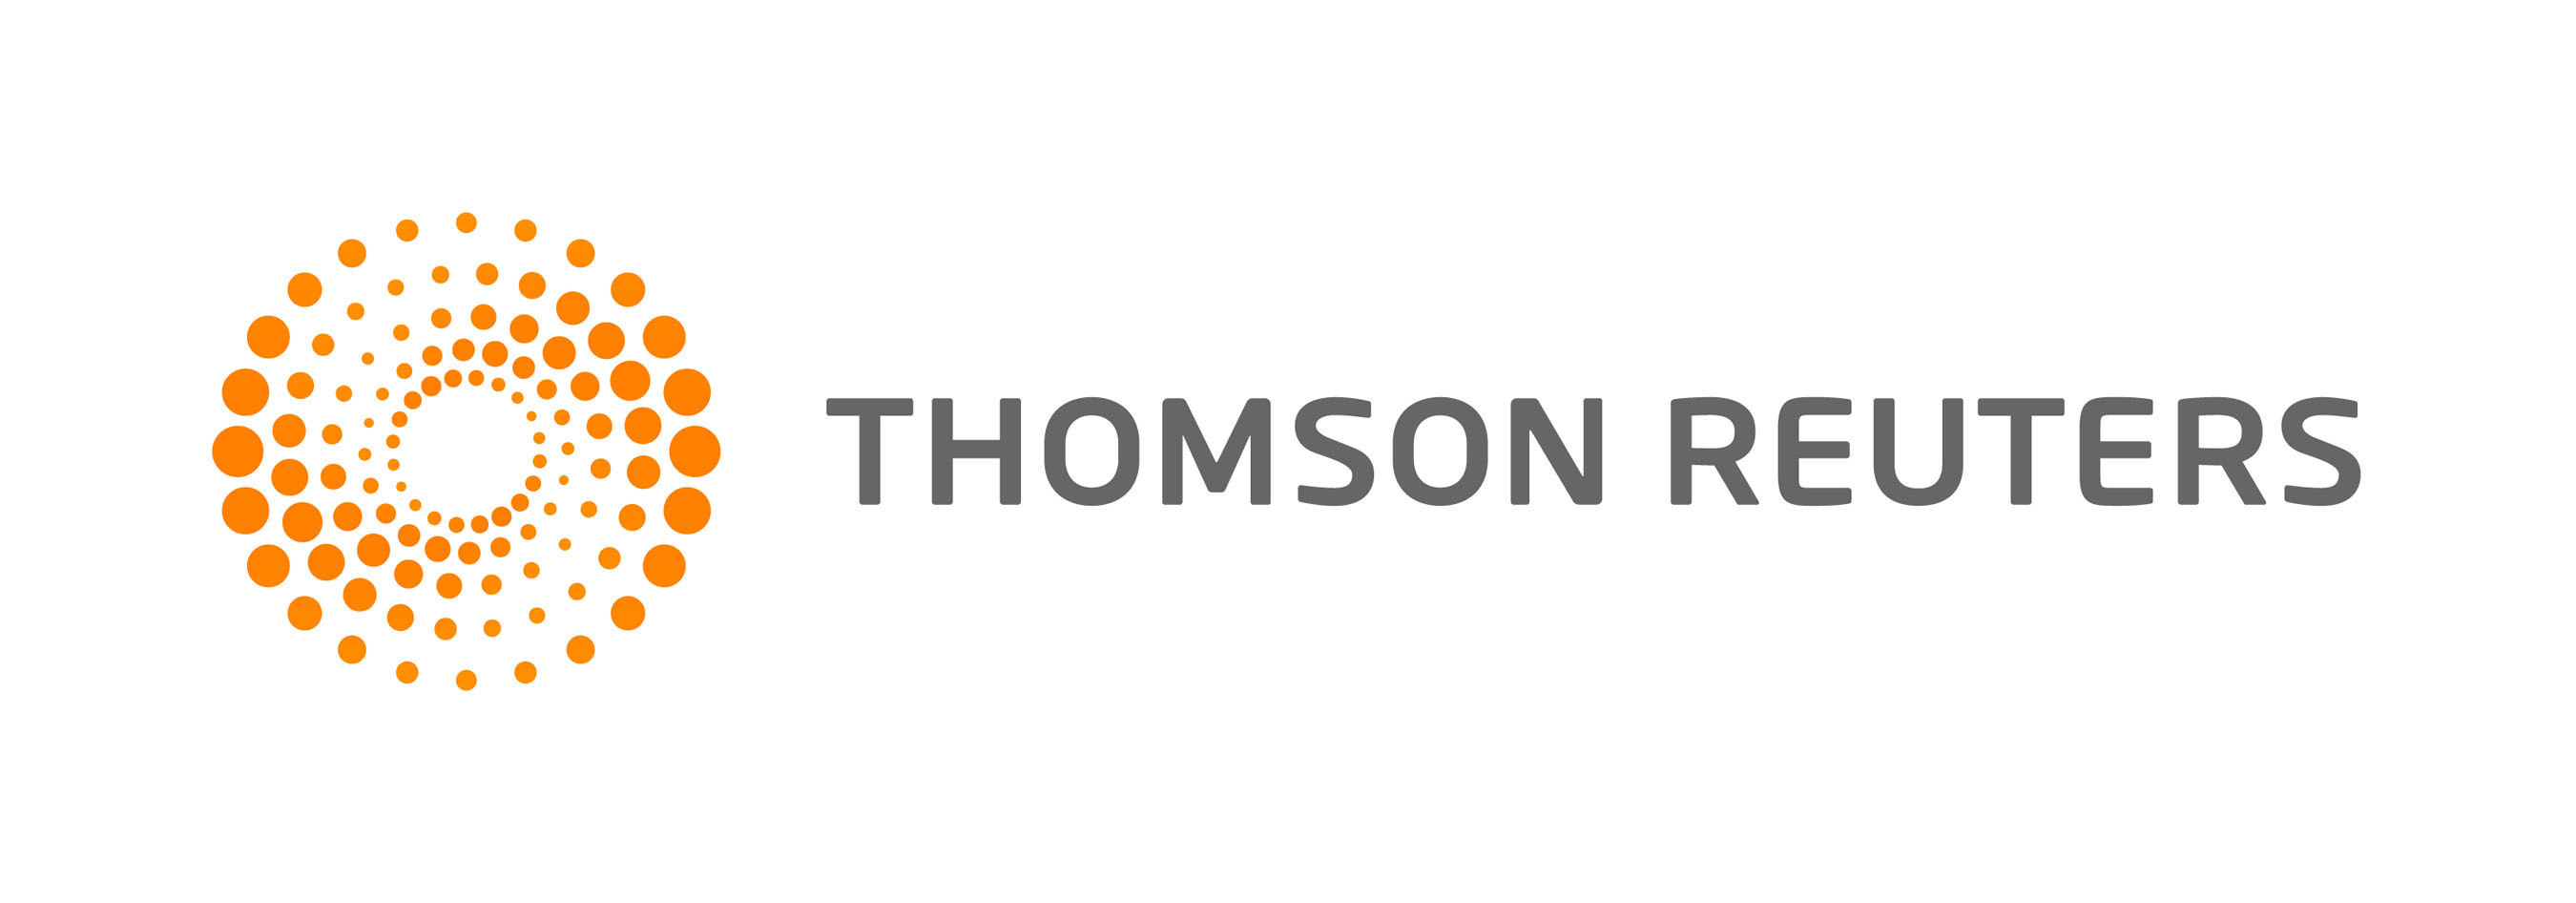 Thomson Reuters logo. (PRNewsFoto/Thomson Reuters) (PRNewsFoto/)